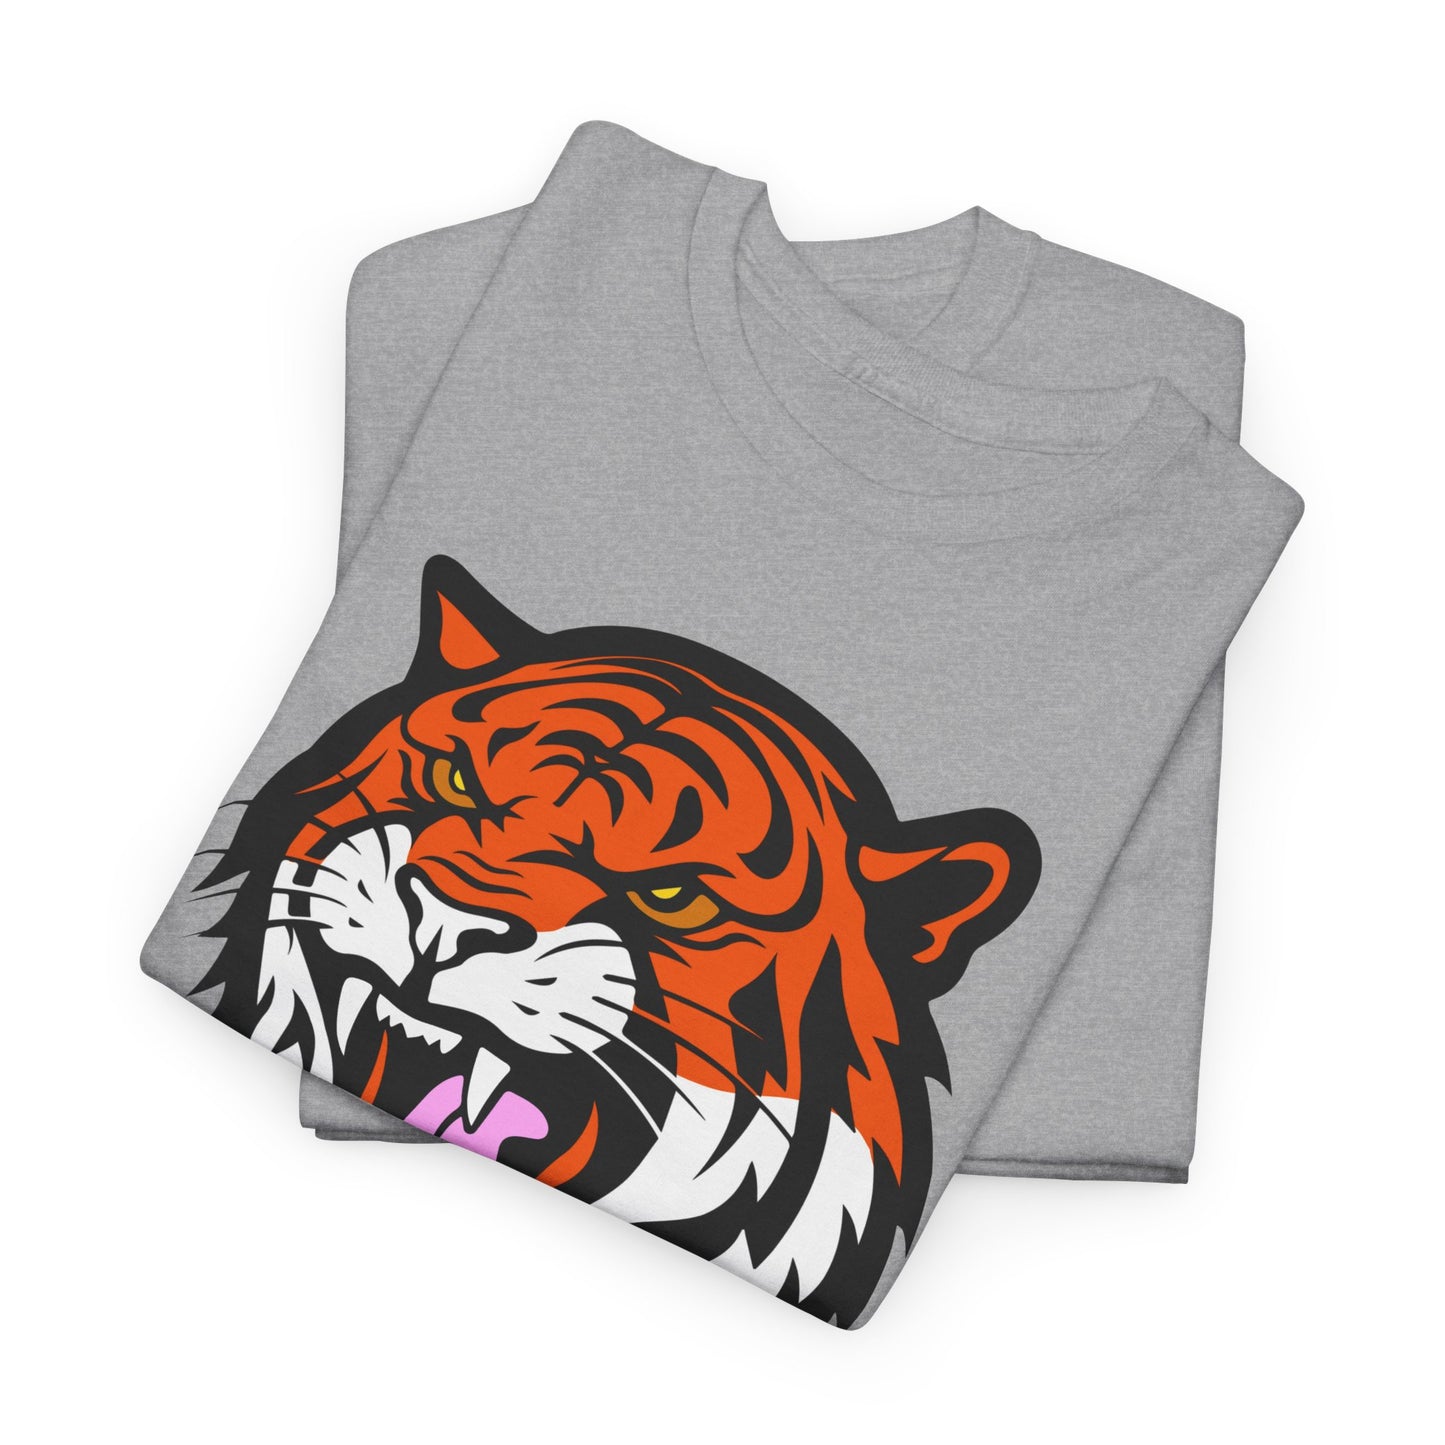 Tiger Head Team Tee - Craftee Designs & Prints 